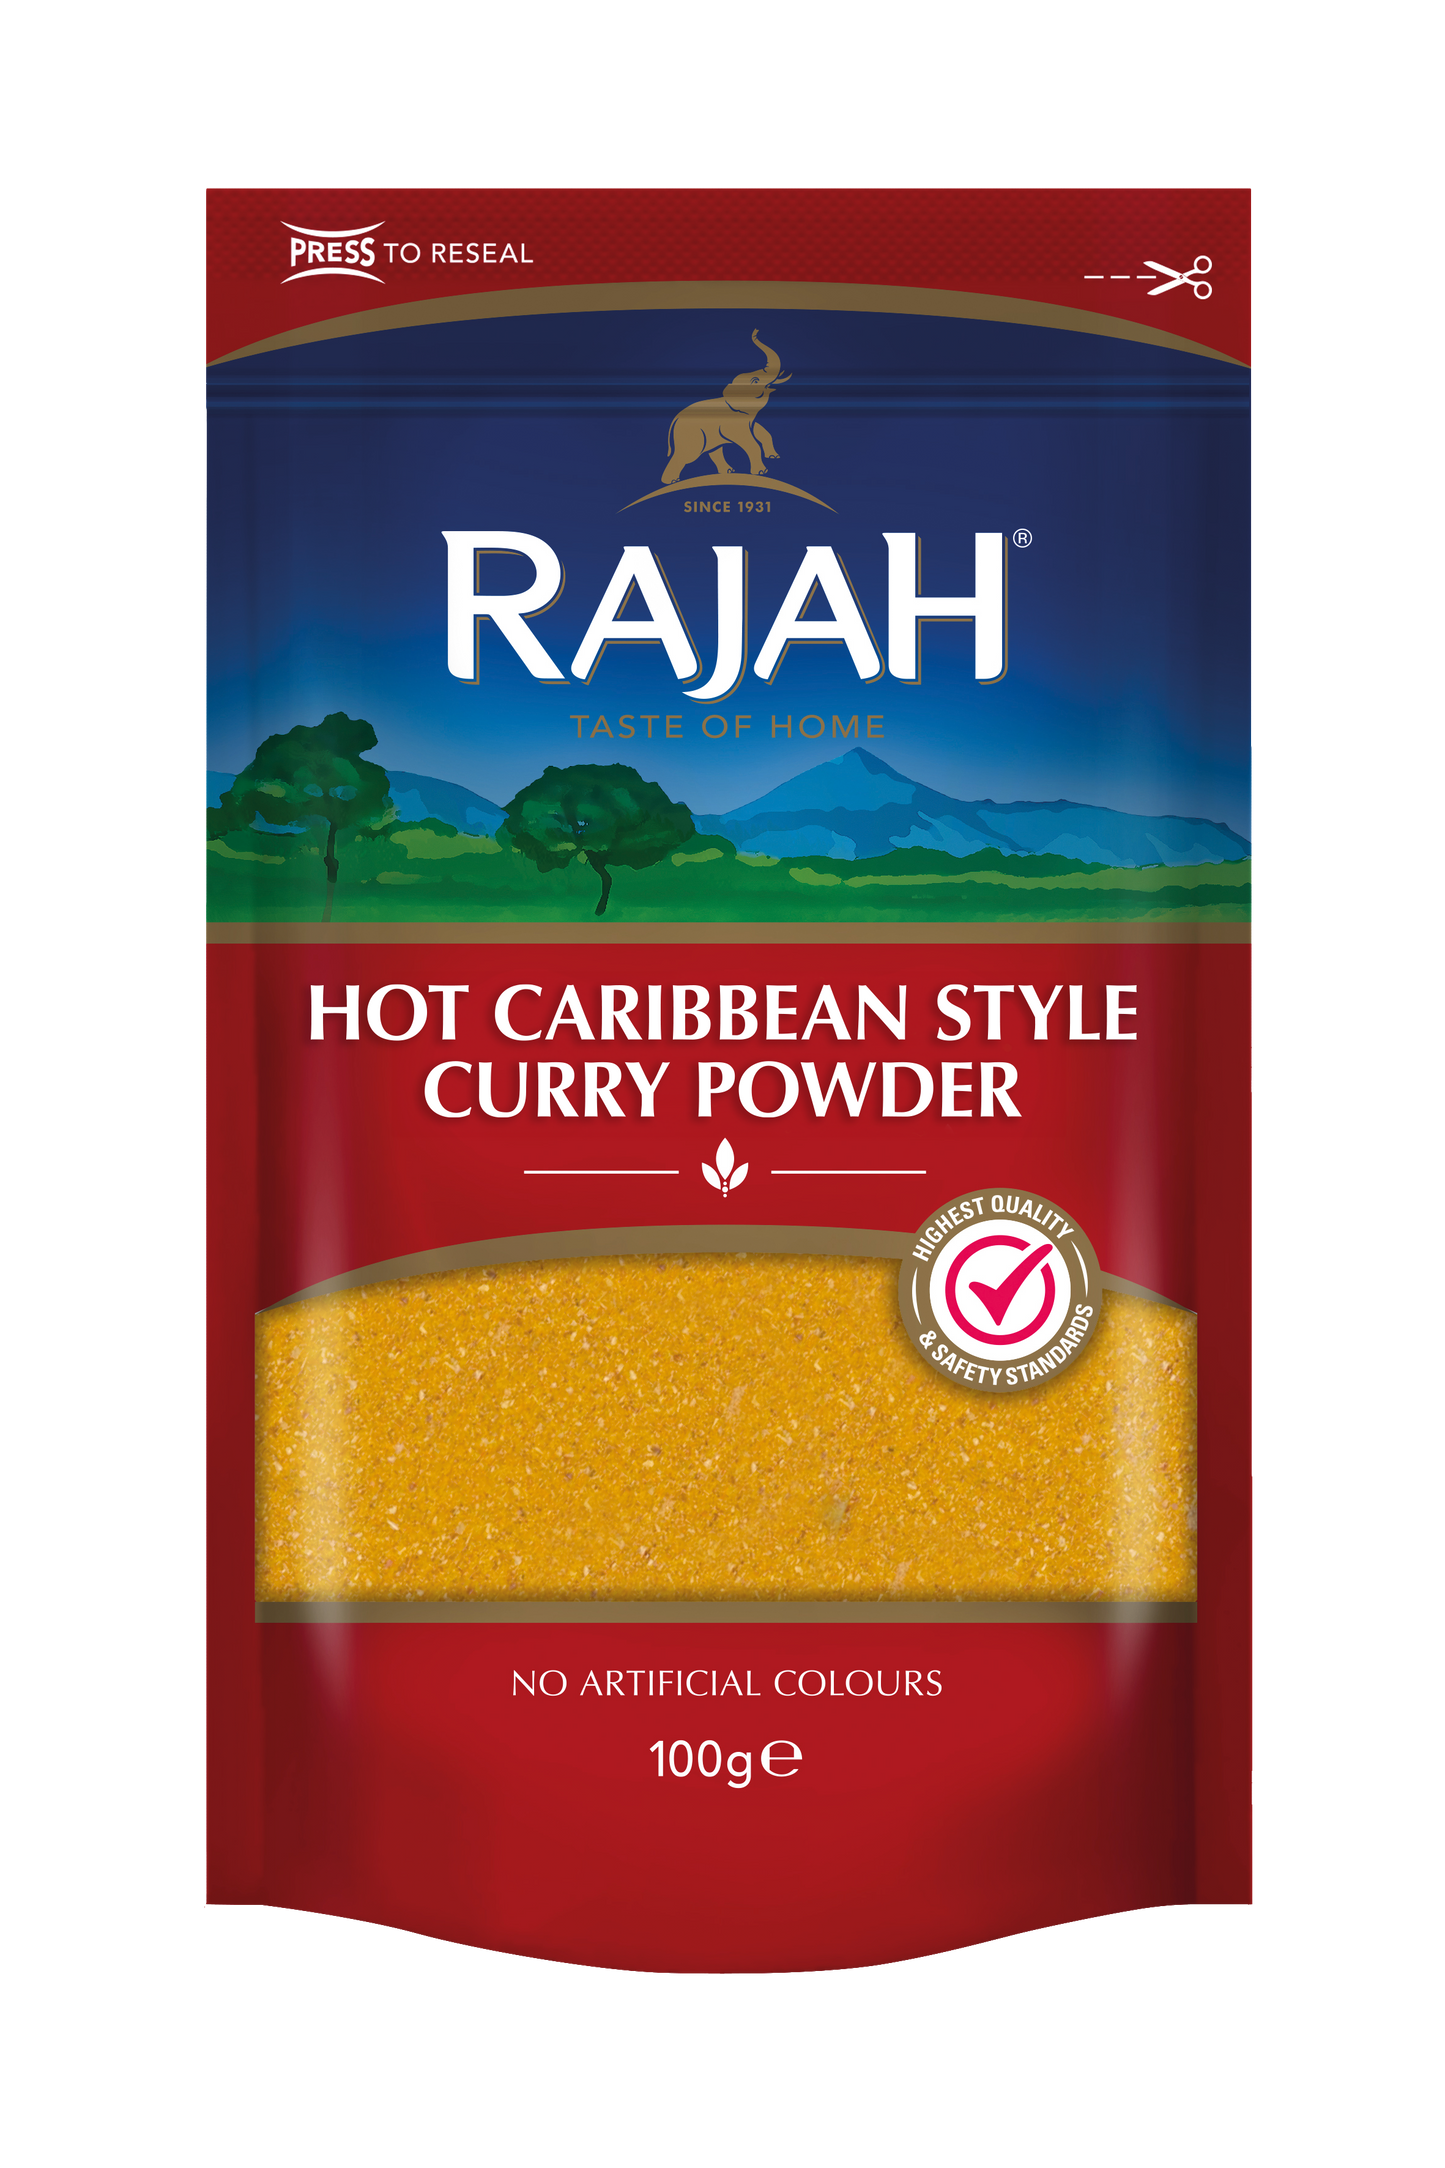 Hot Caribbean Curry Powder